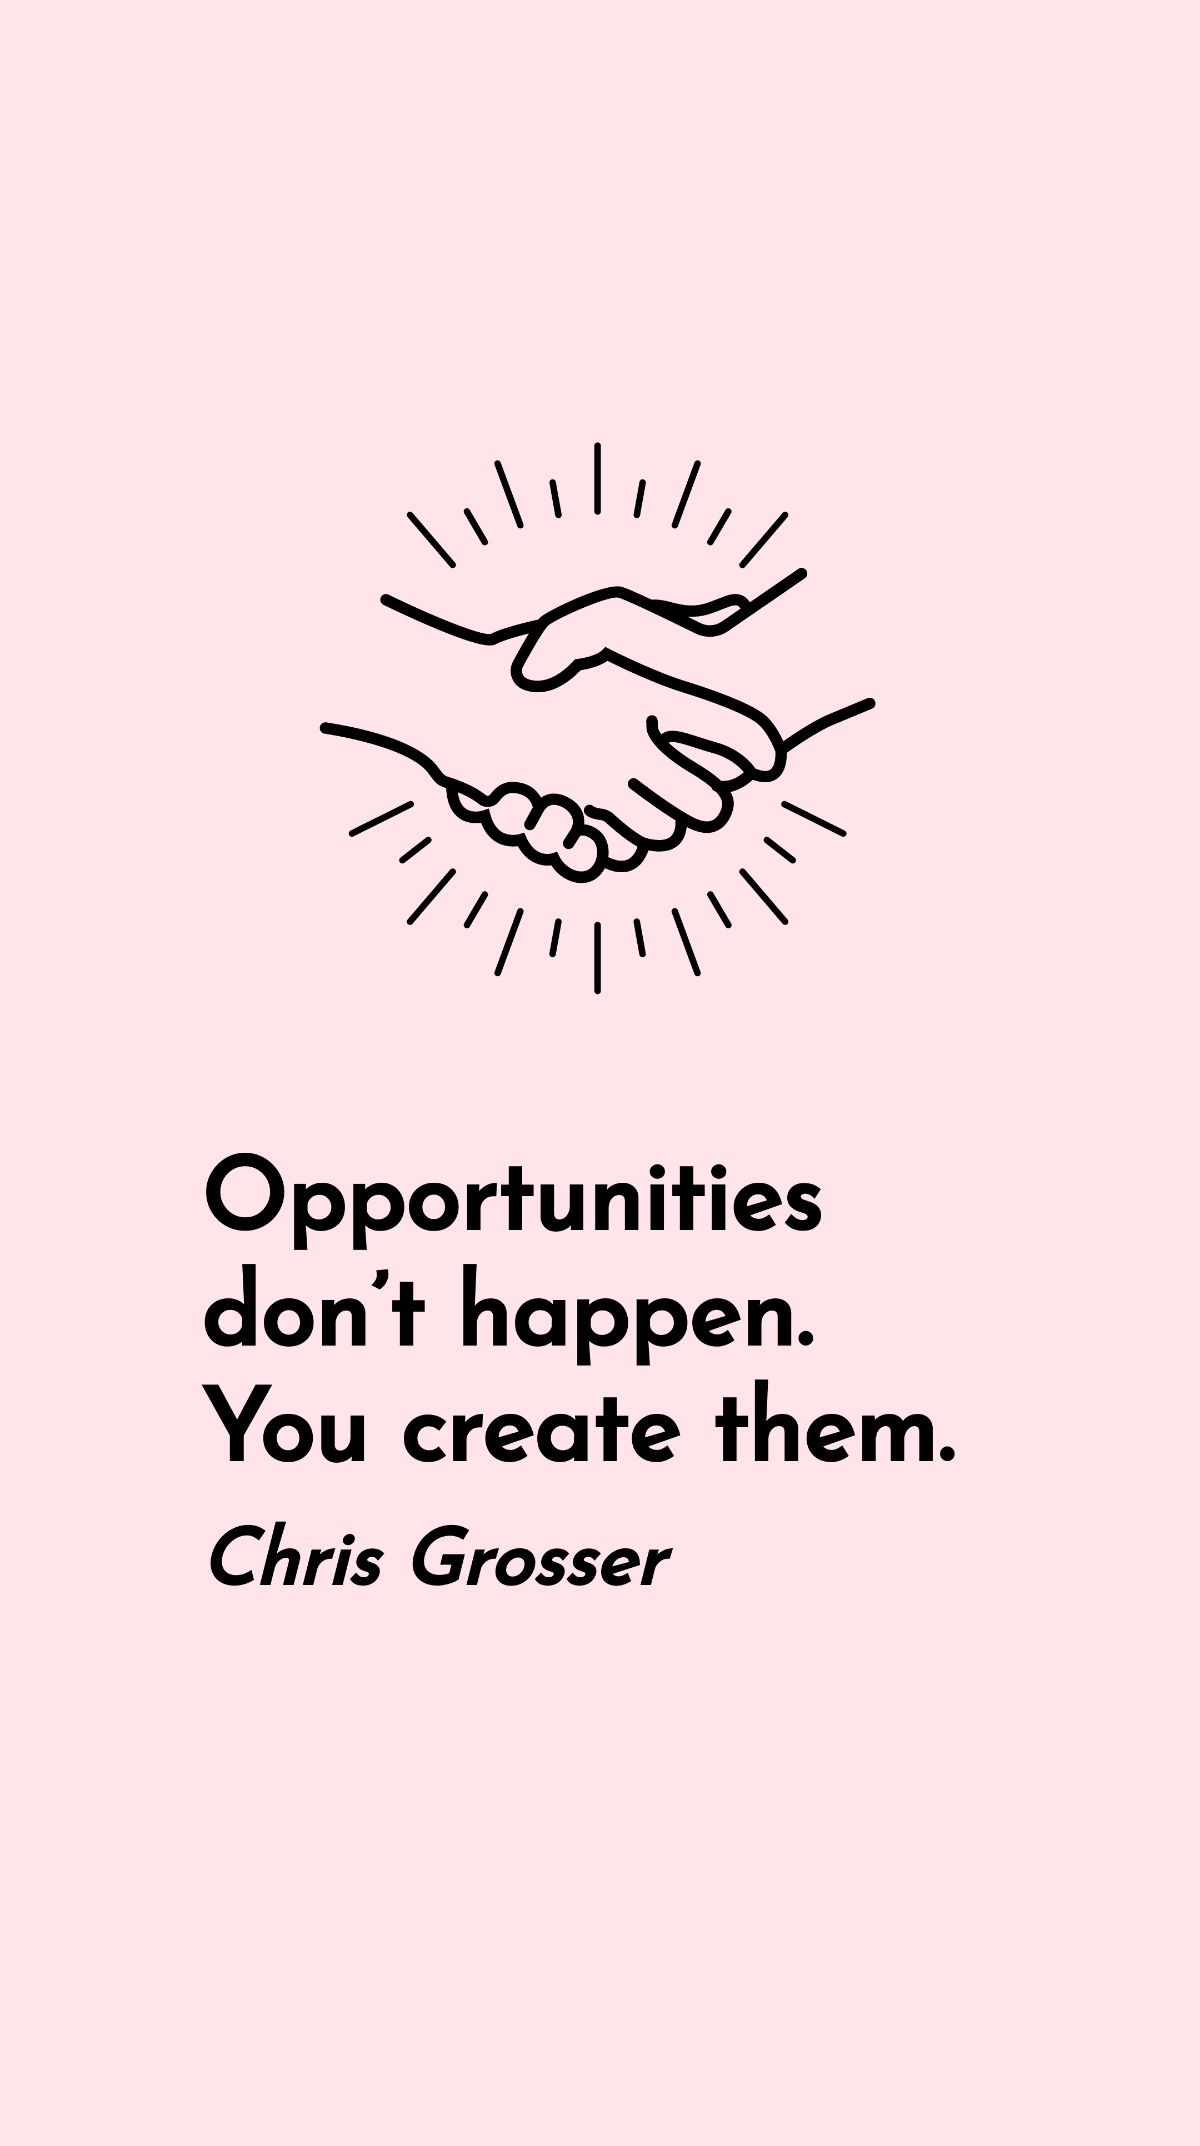 Chris Grosser - Opportunities don’t happen. You create them.